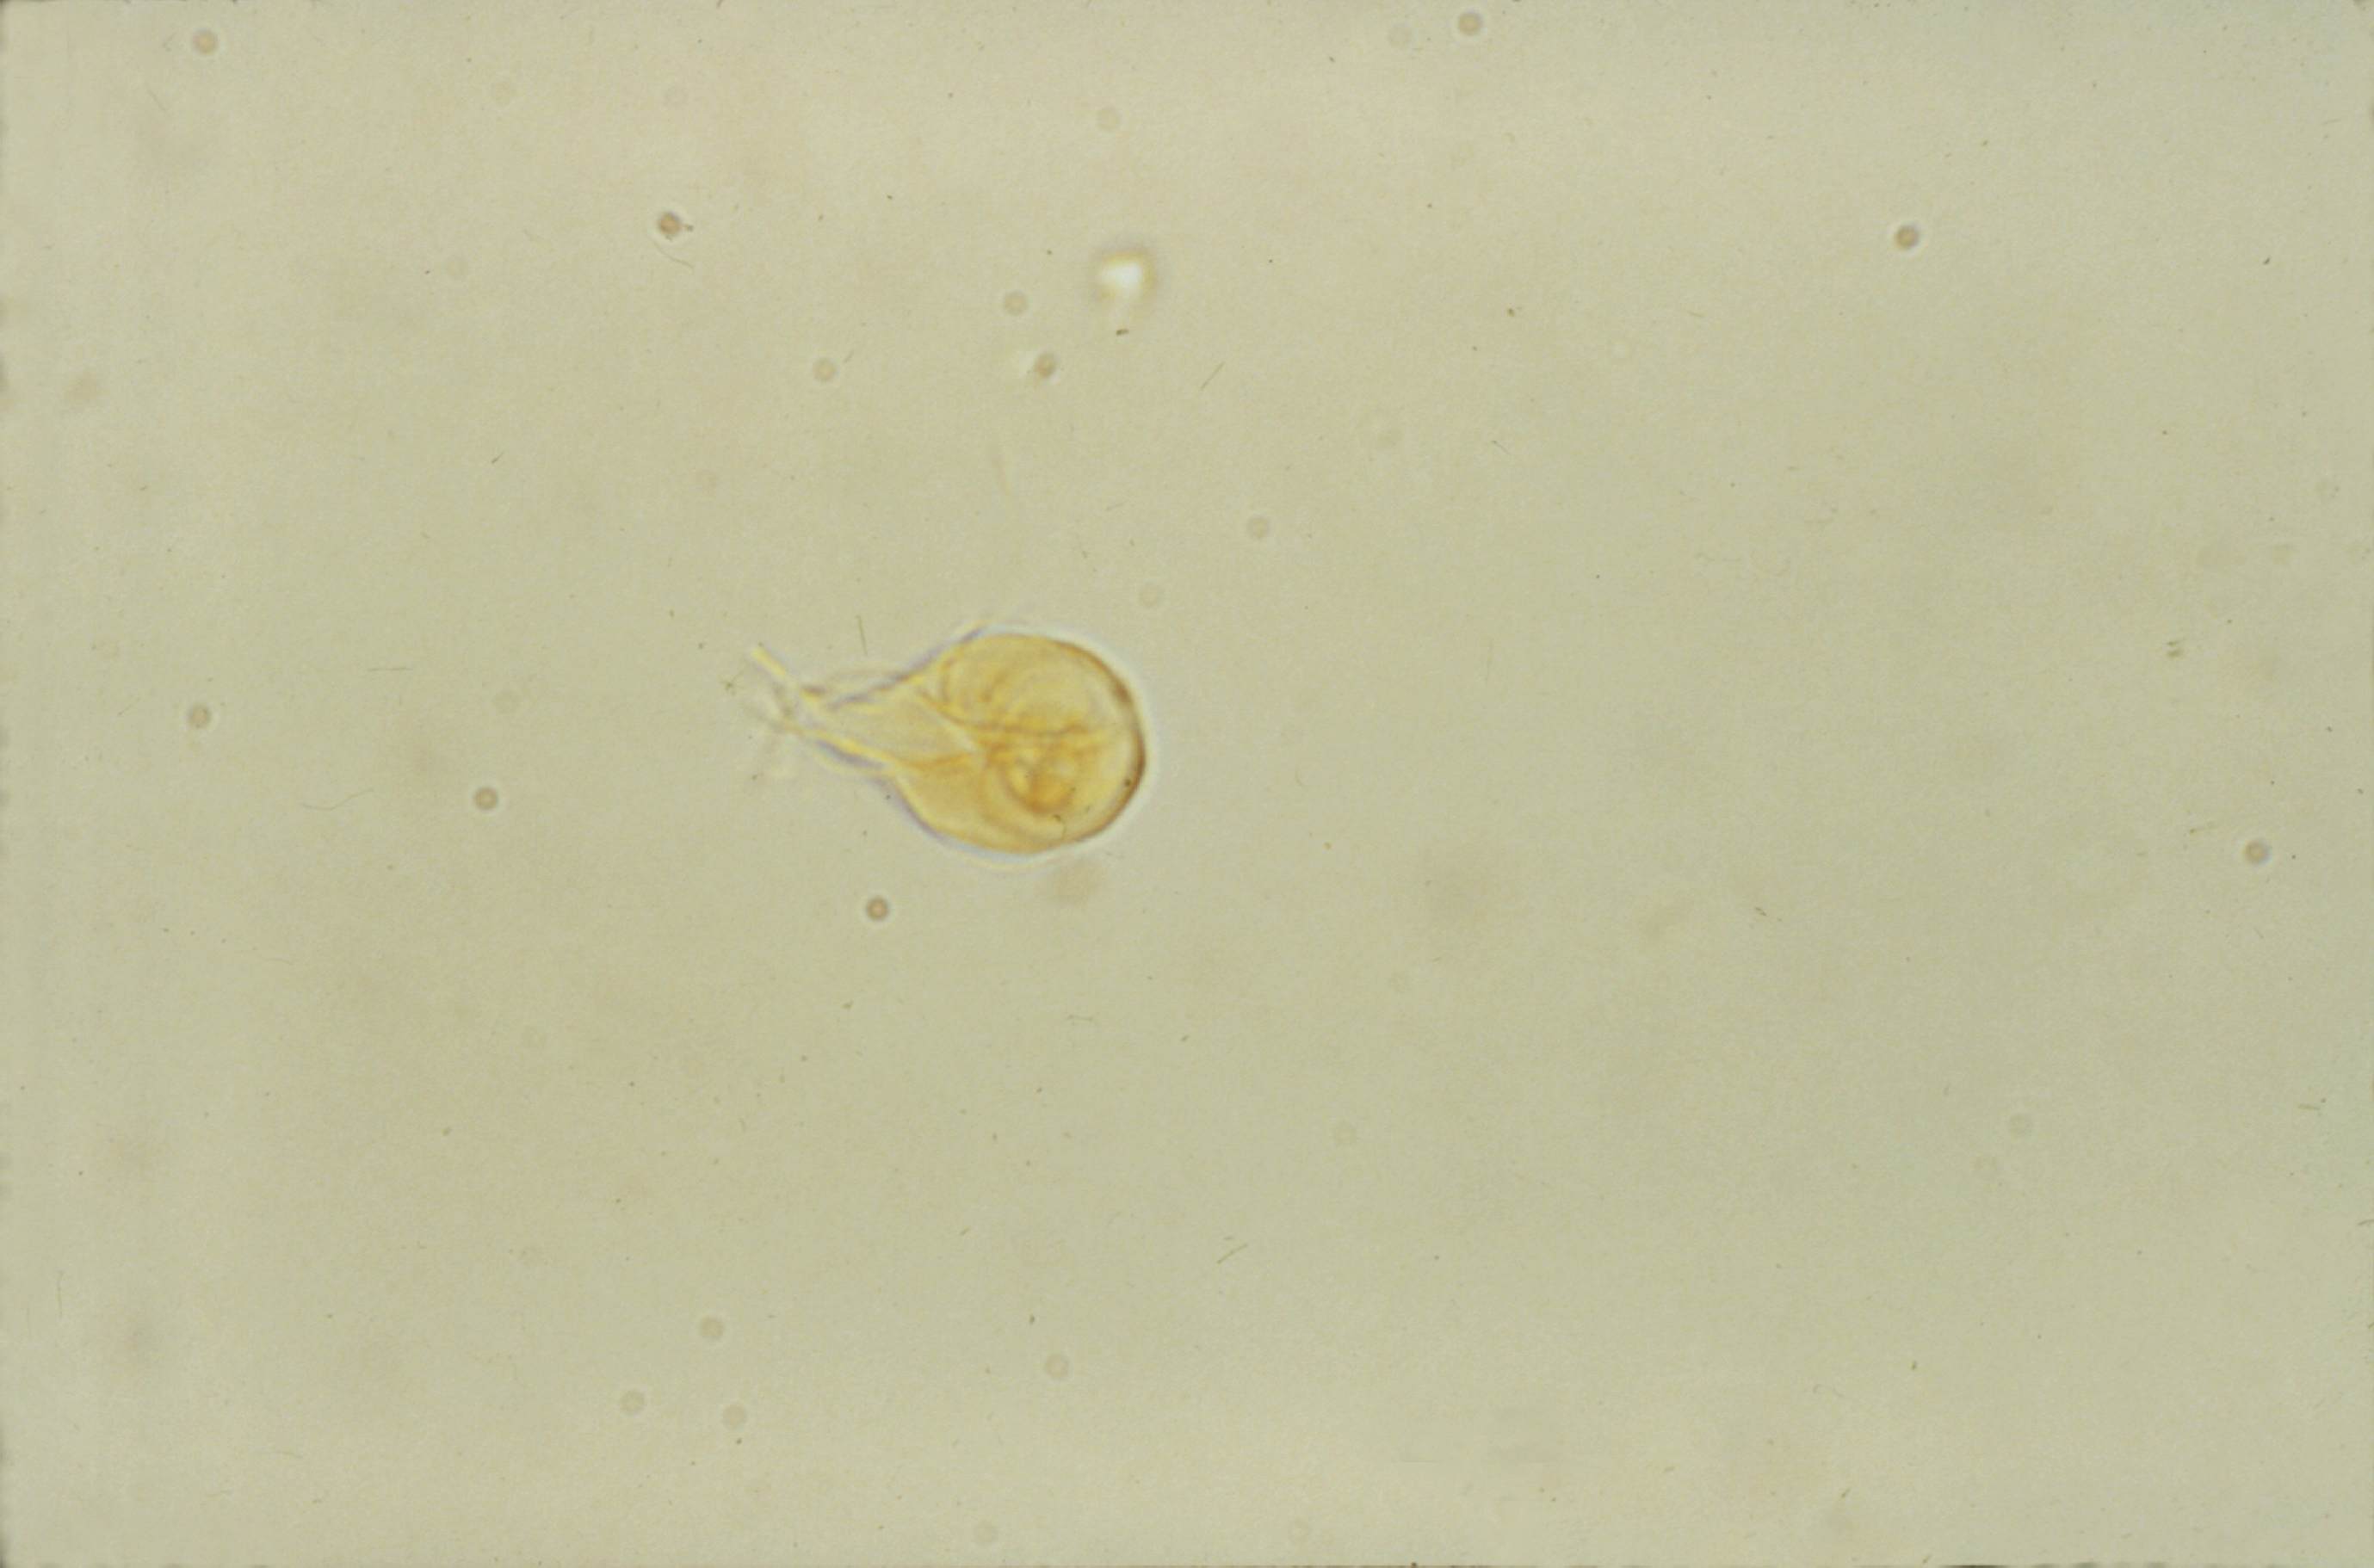 Giardia Lamblia Cyst Under Microscope Micropedia